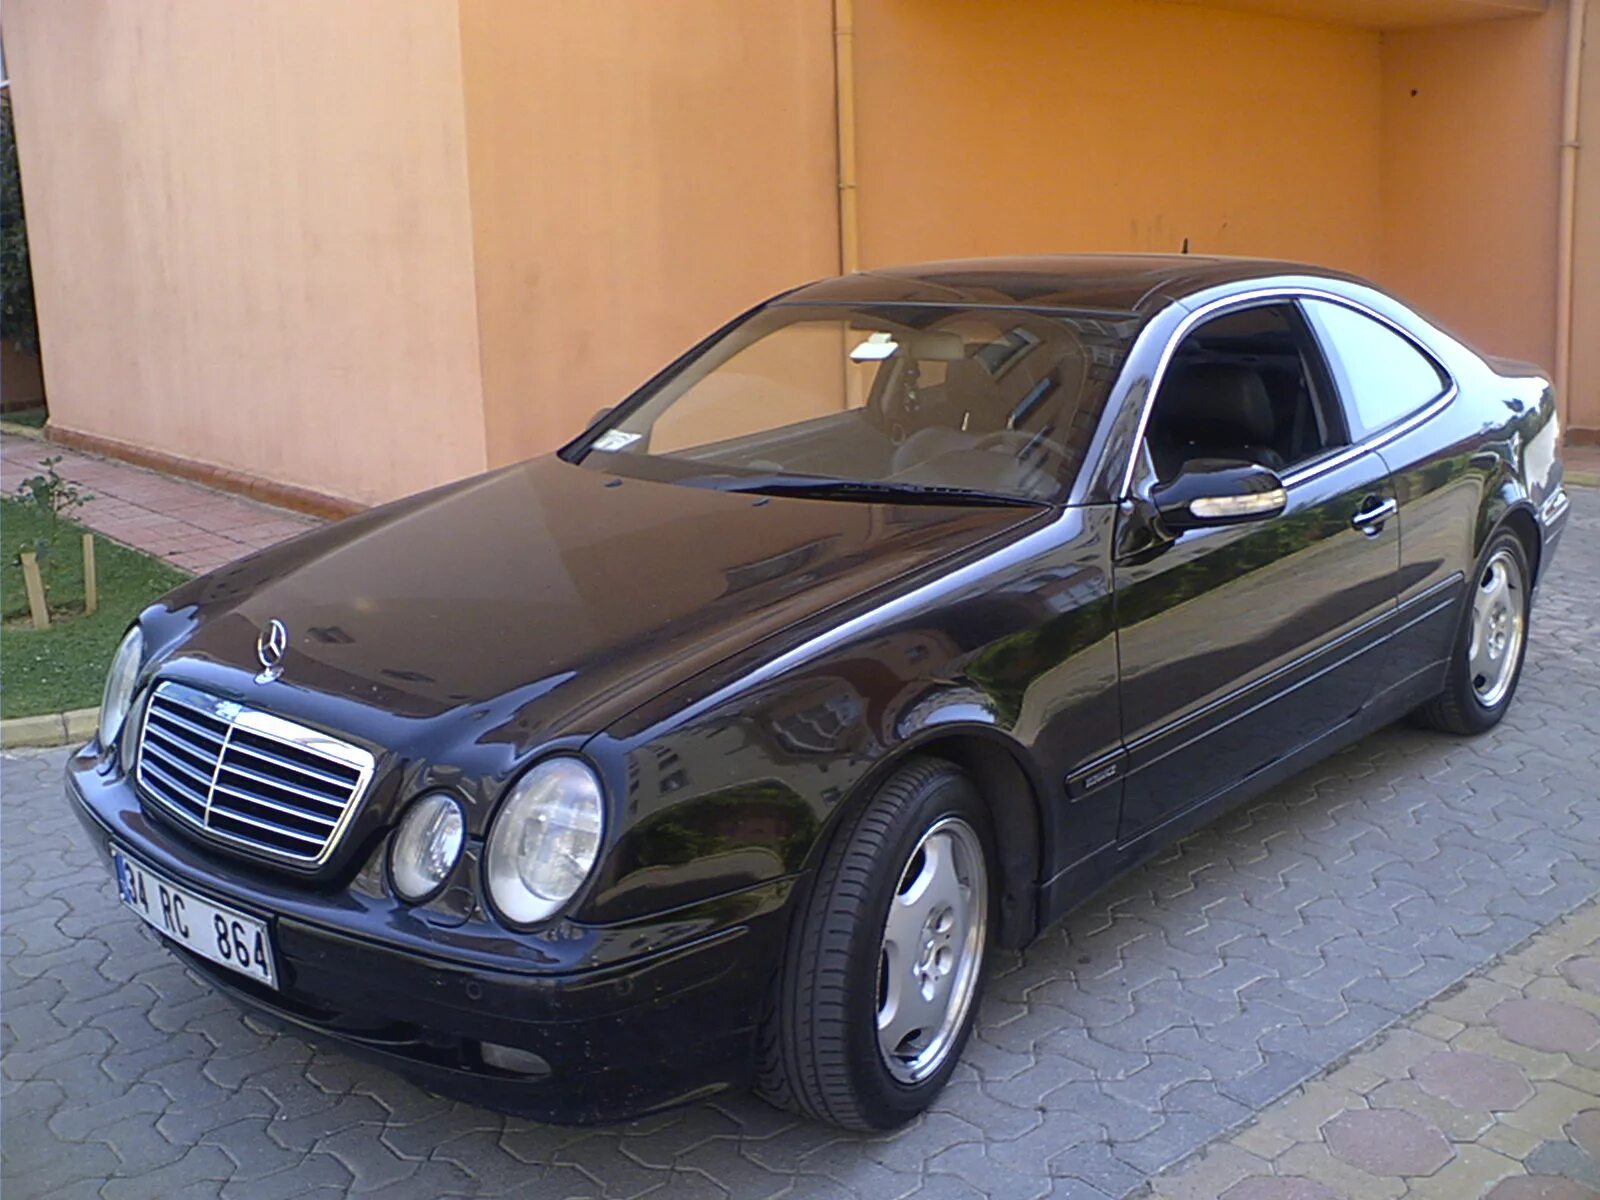 Mercedes Benz 2000. Mercedes-Benz CLK-class 2000. Мерседес CLK купе 2000. Мерседес ЦЛК 2000. С класс 2000 года